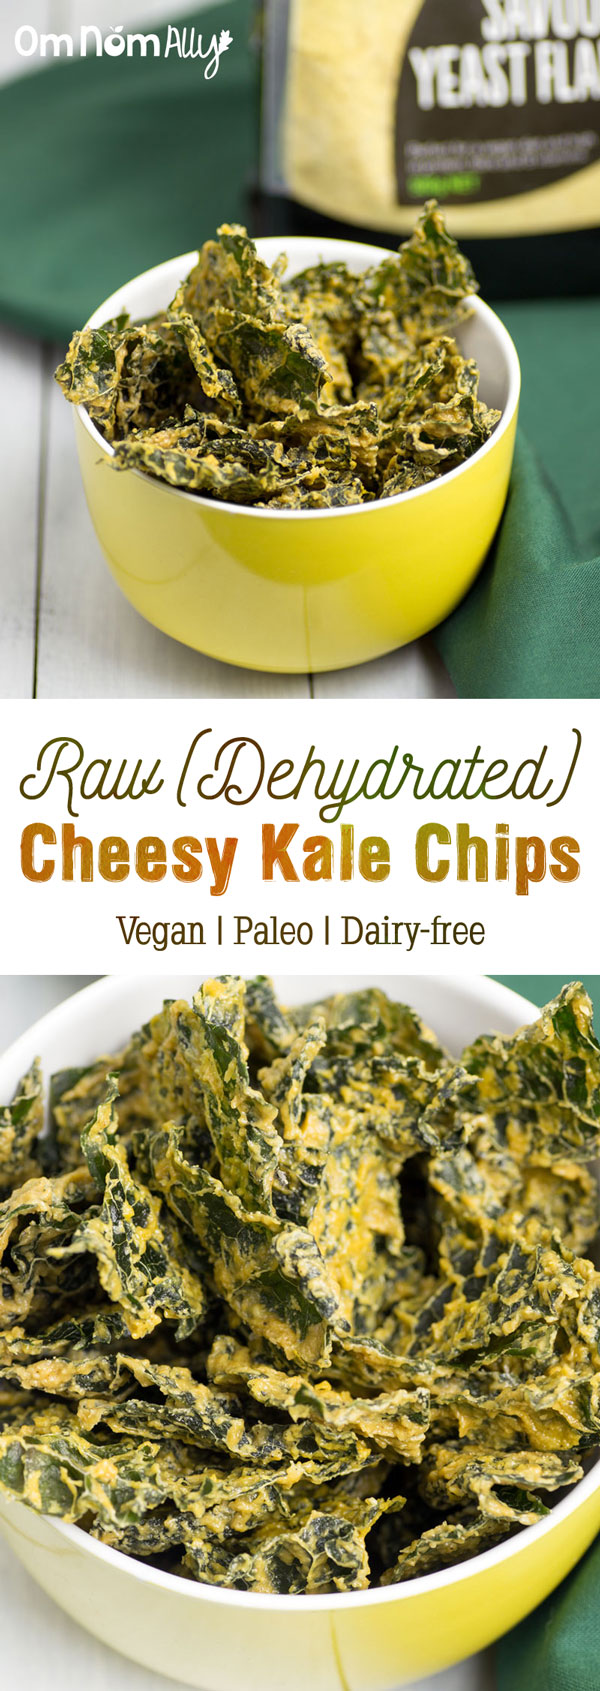 Raw (Dehydrator) Cheesy Kale Chips @OmNomAlly - Vegan, Paleo & Dairy Free